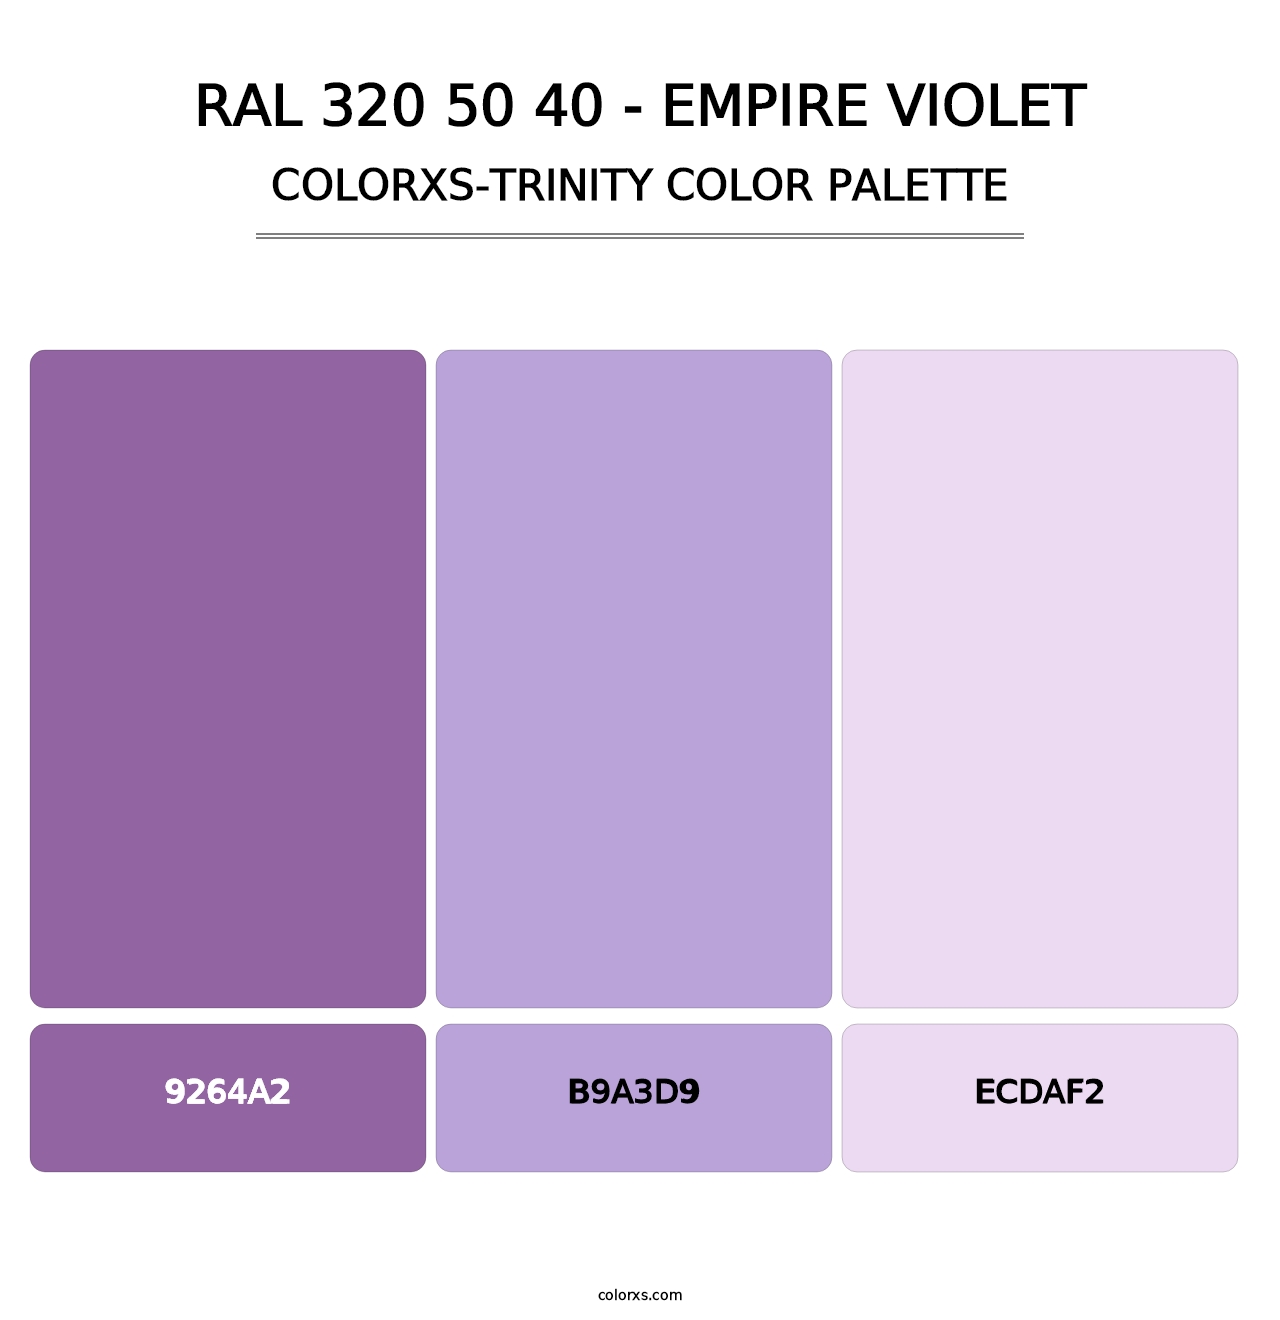 RAL 320 50 40 - Empire Violet - Colorxs Trinity Palette